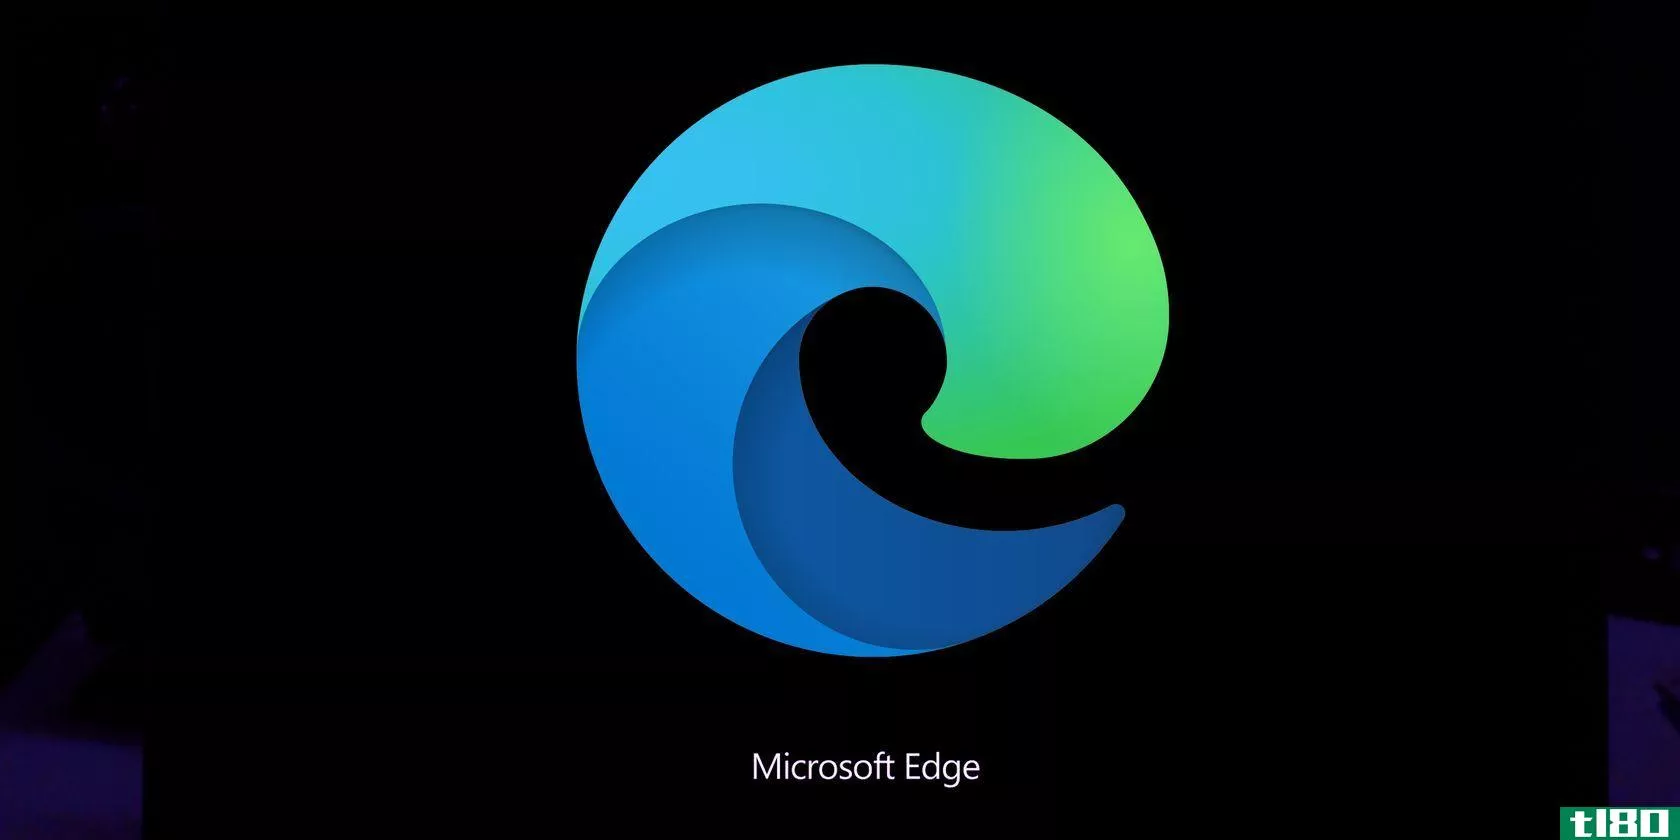 The Microsoft Edge logo